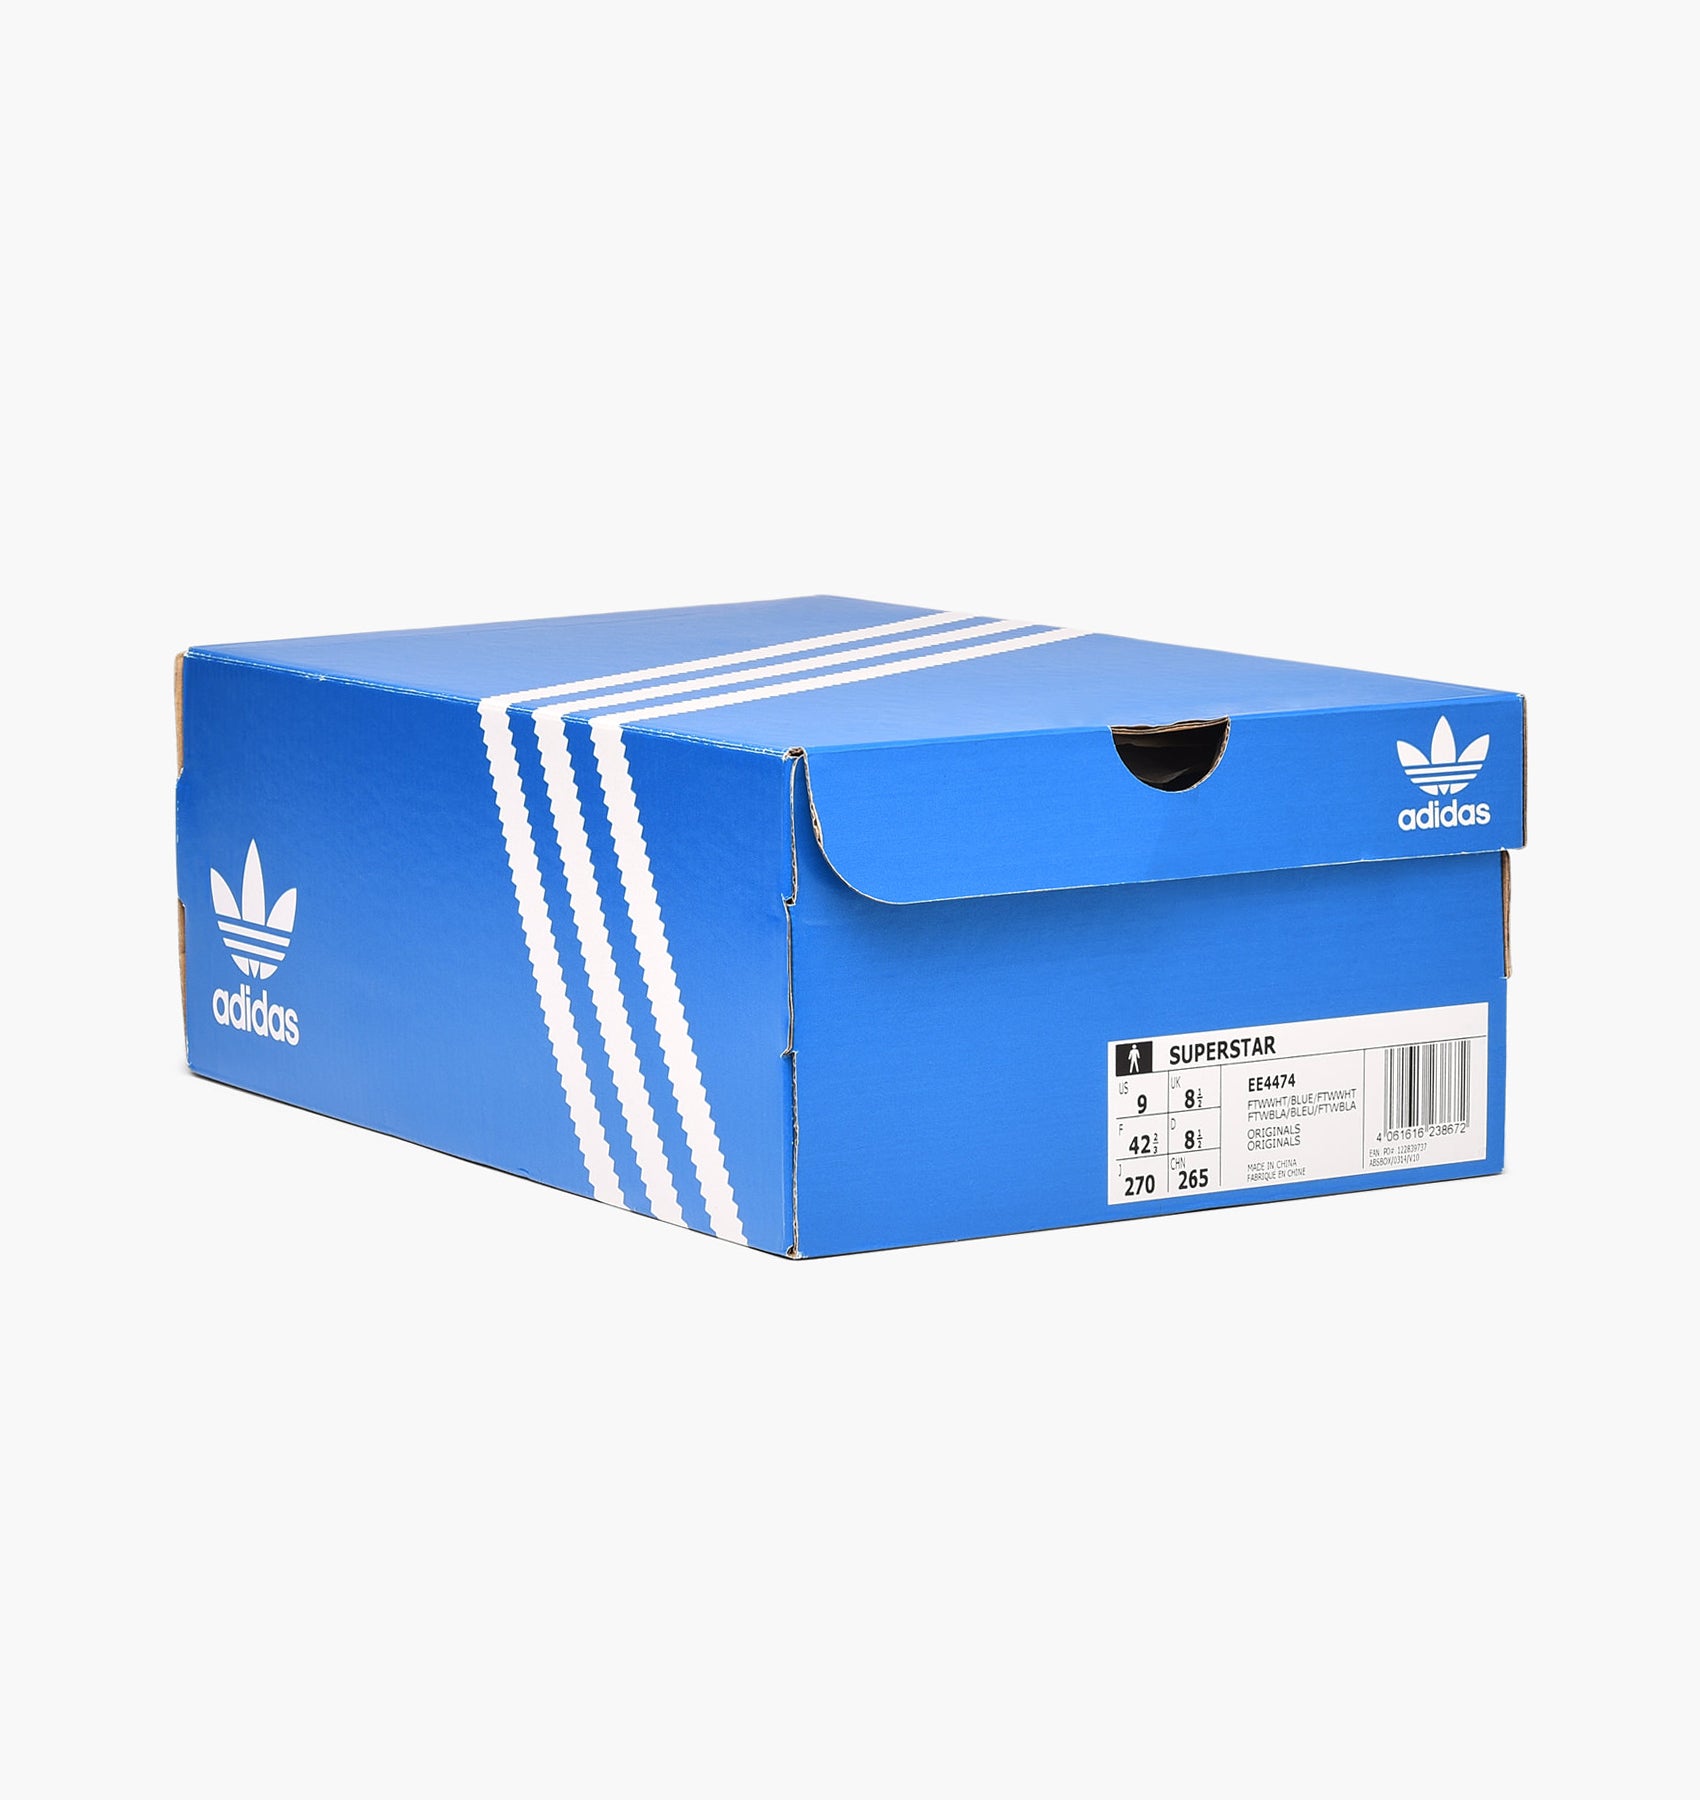 Adidas Originals Superstar EE4474 - Box